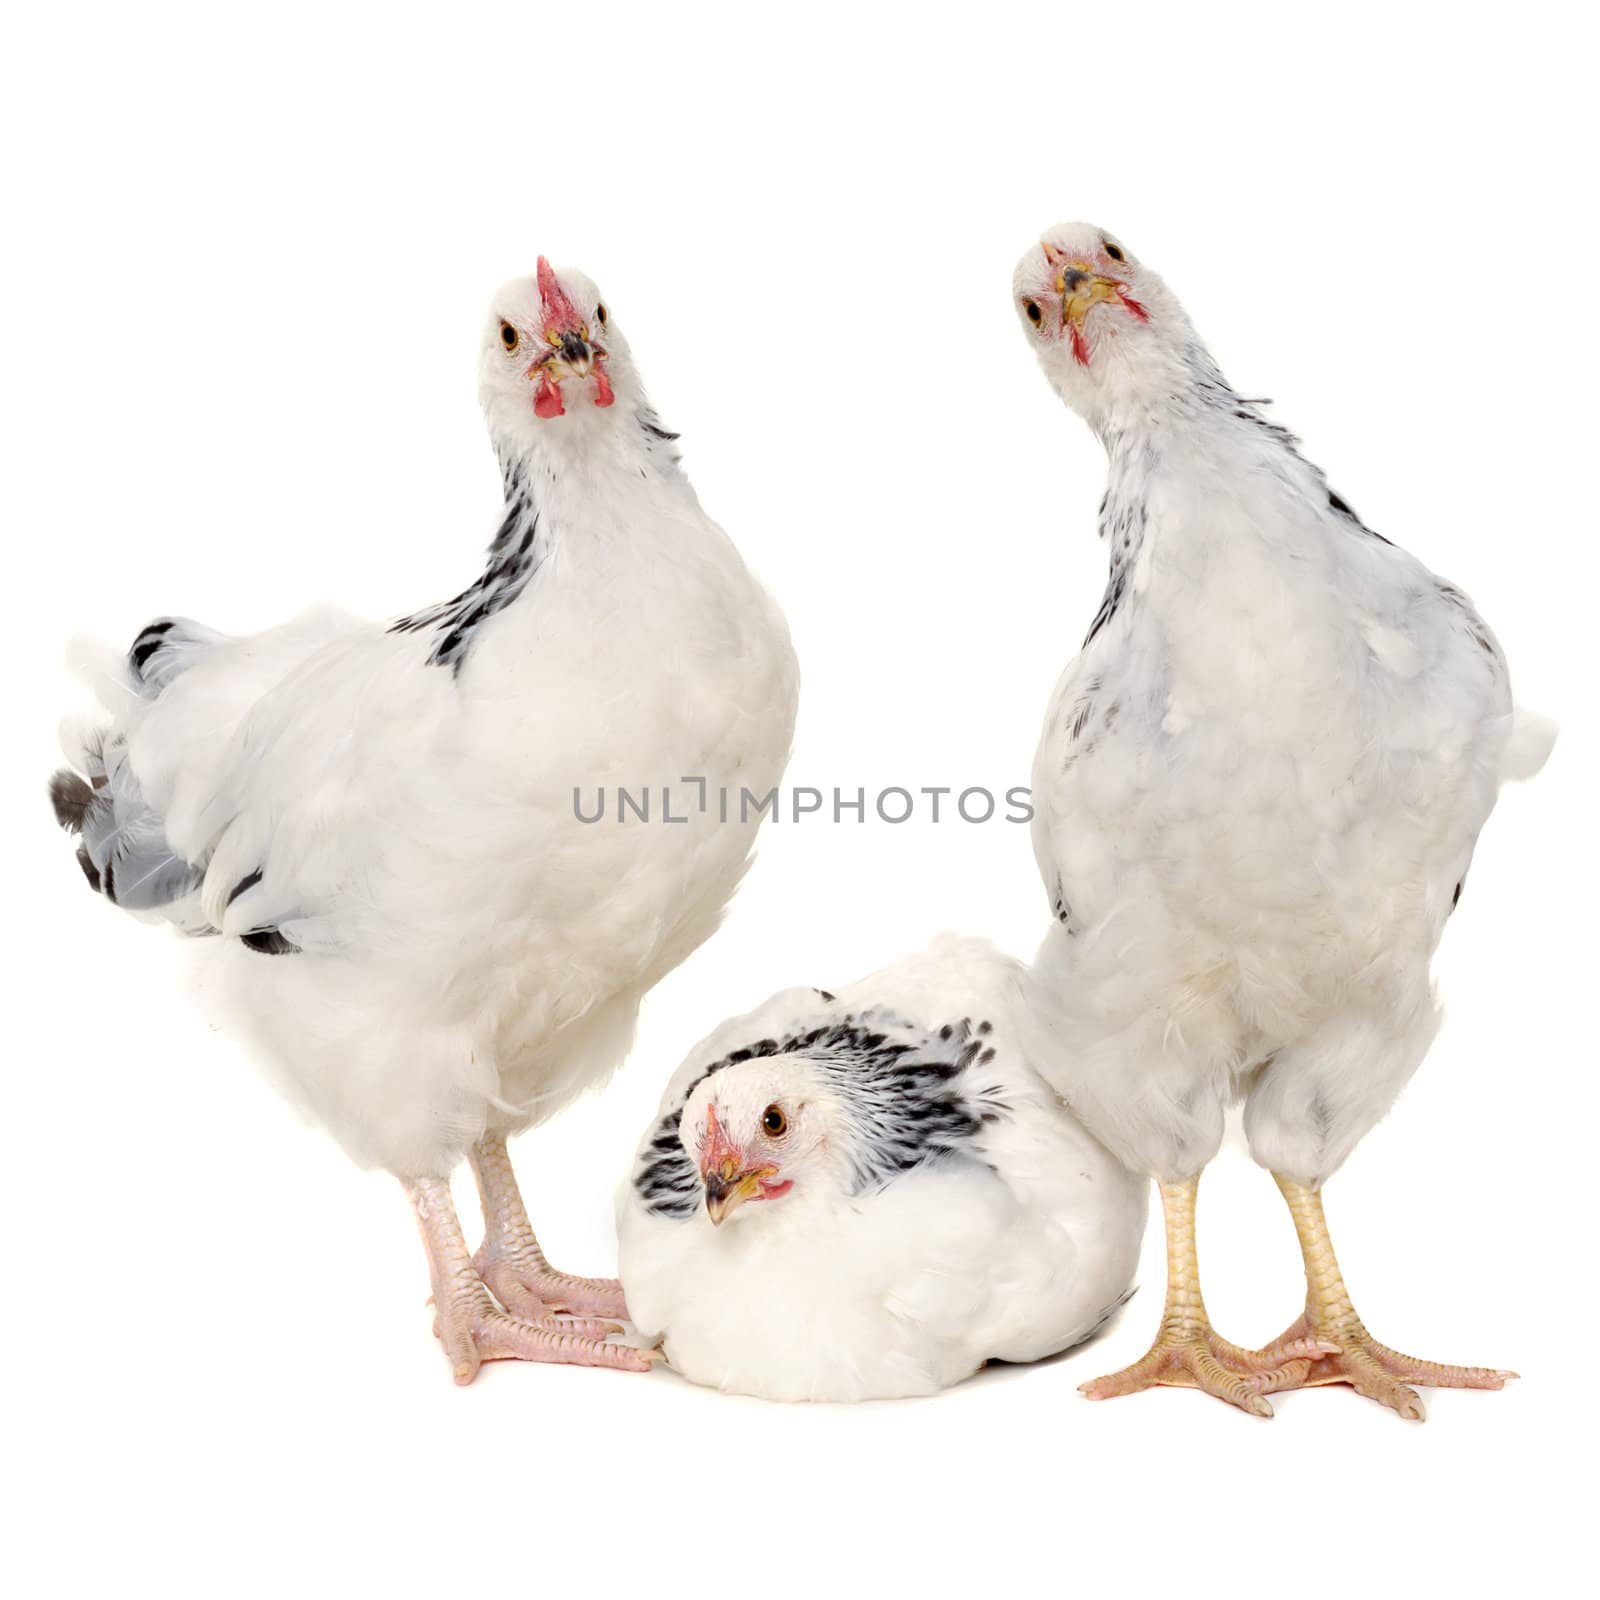 Chickens on white background by cfoto